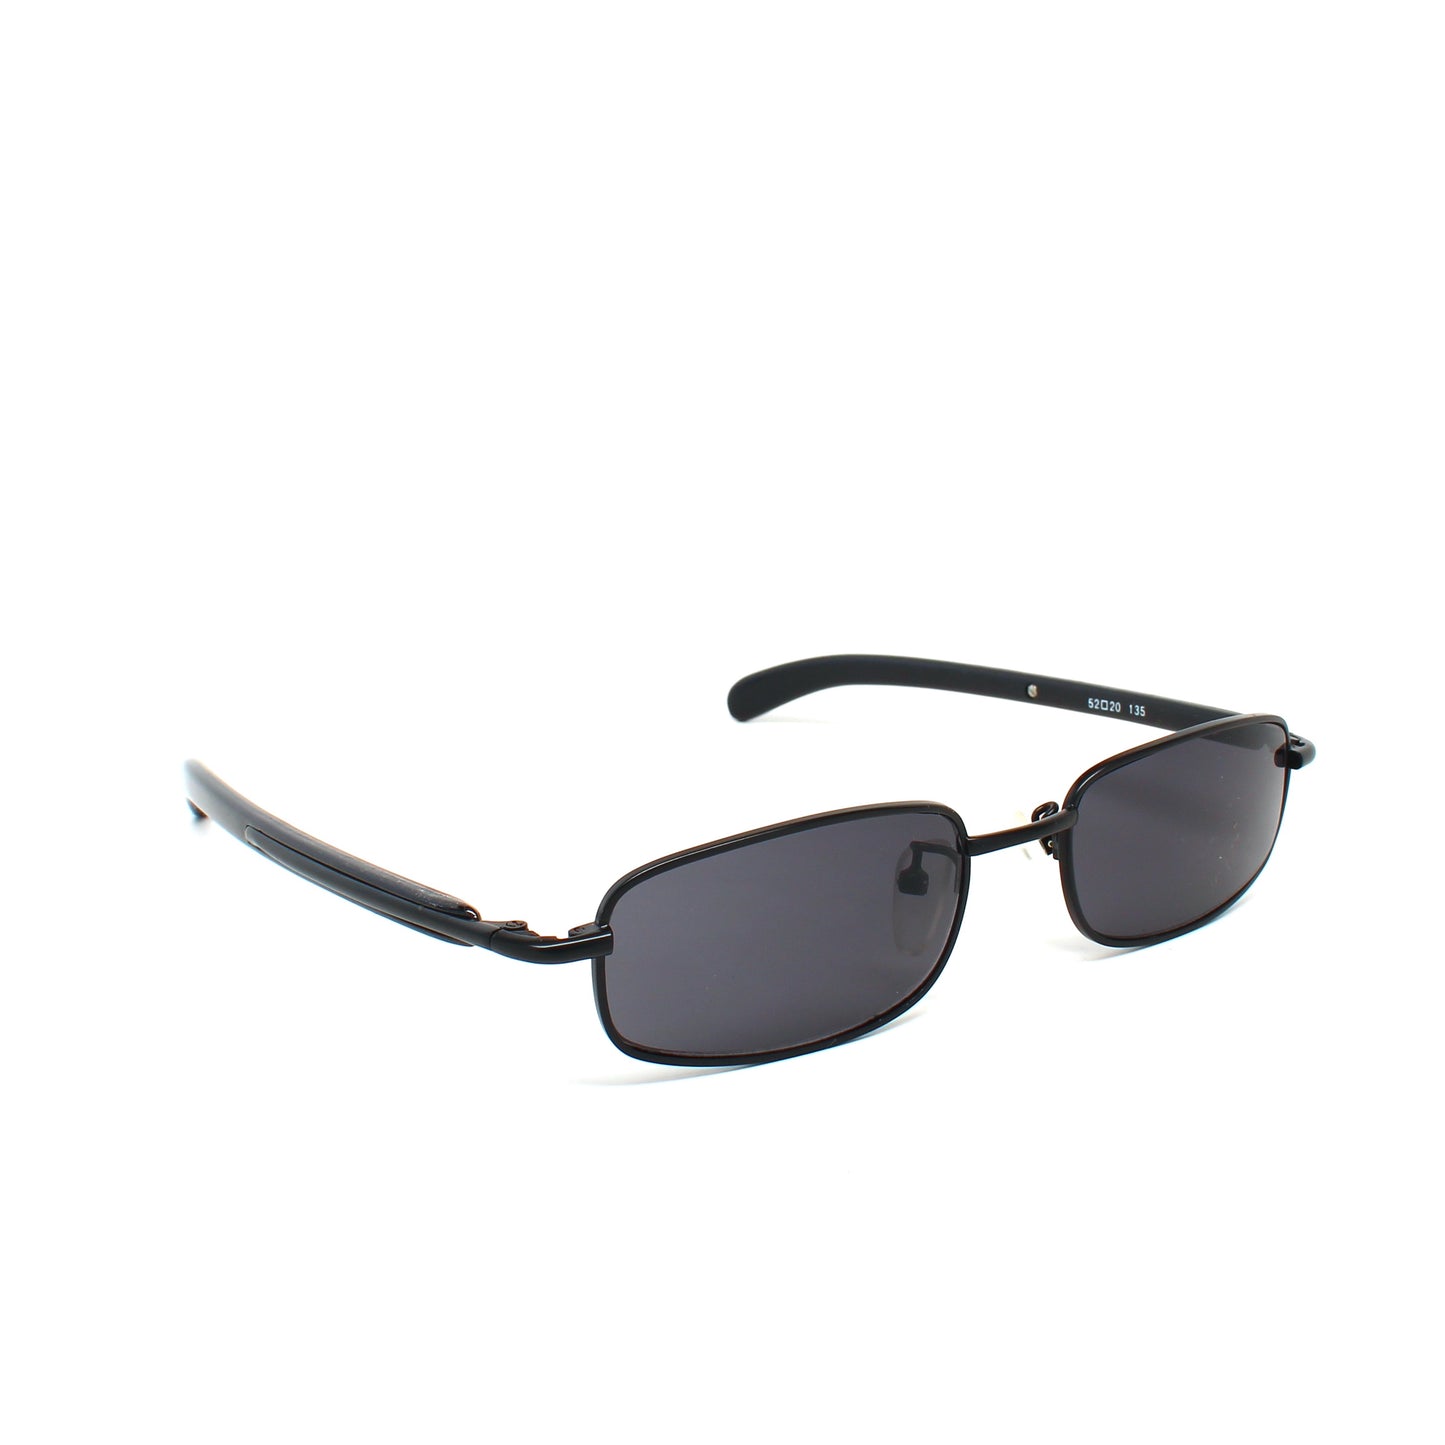 Vintage Small Size 1996 Wraparound Rectangle Roxbury Sunglasses - Black